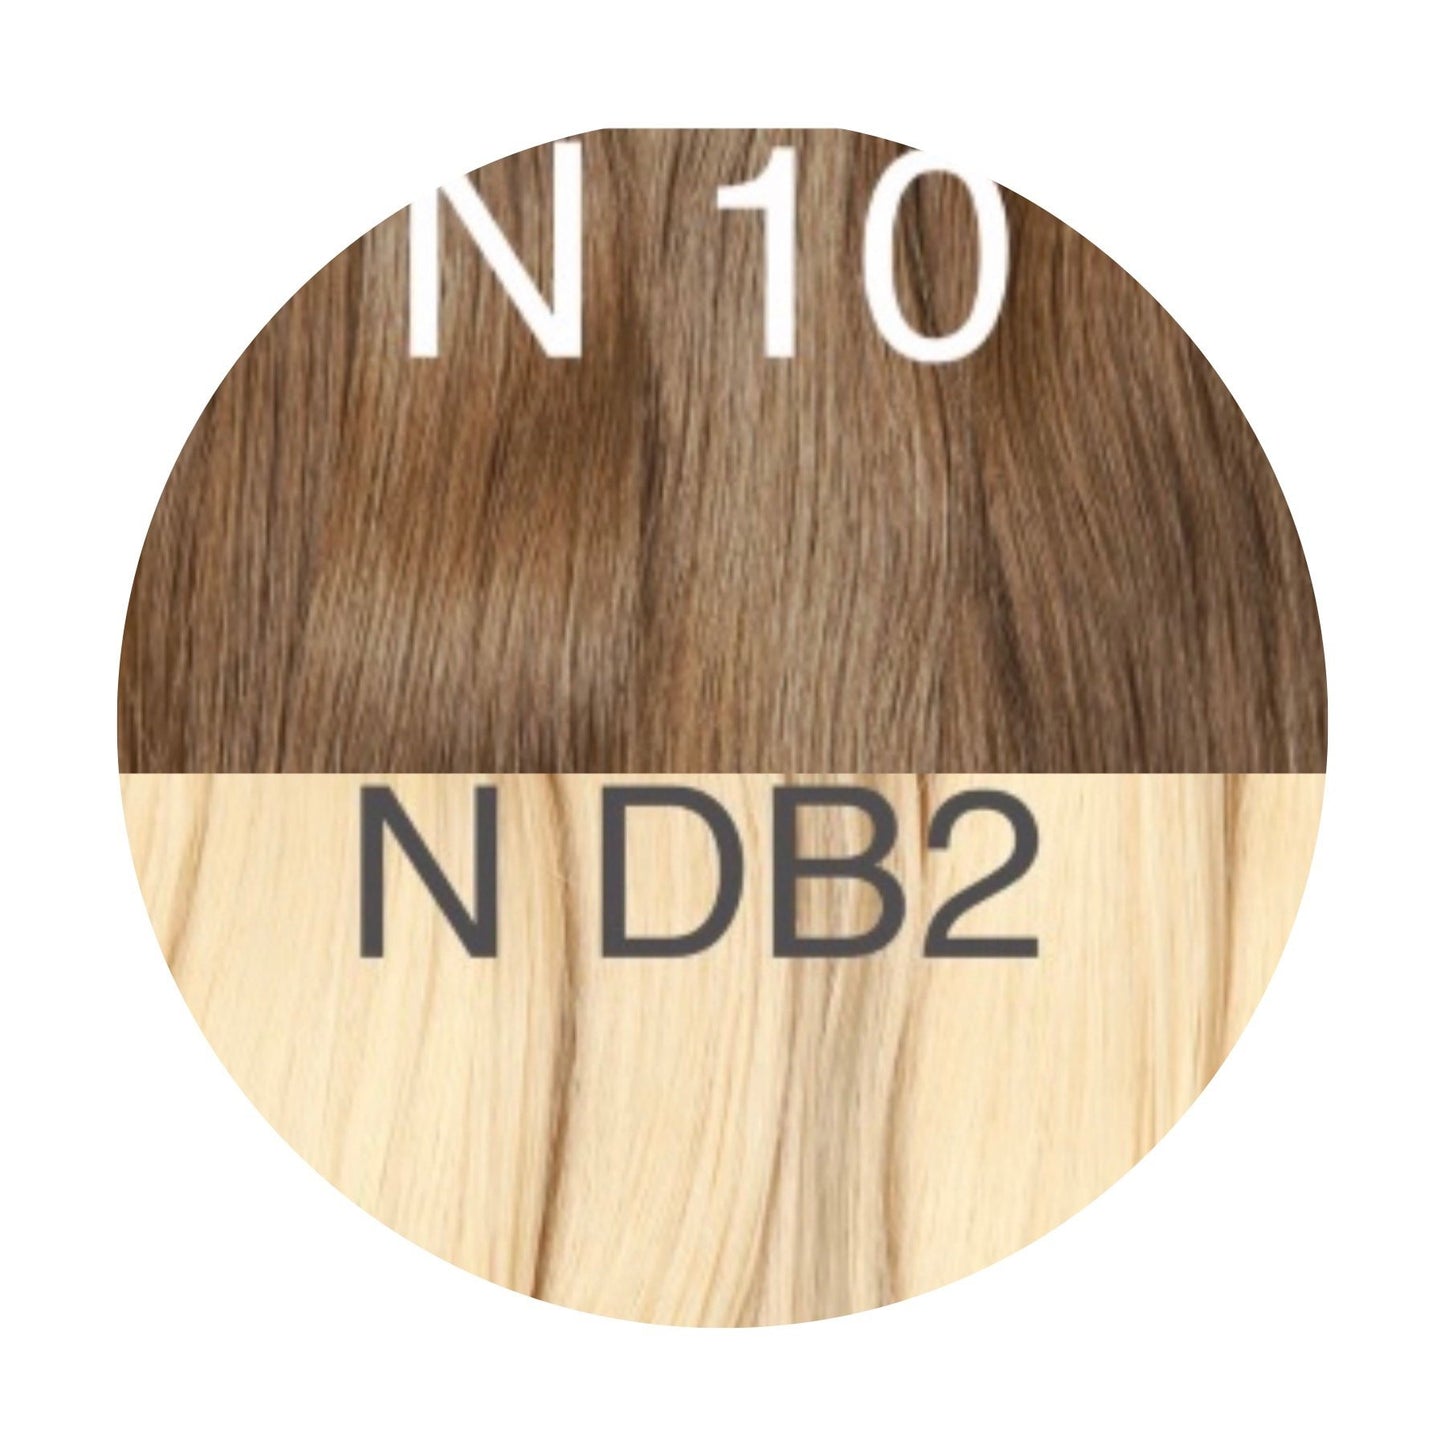 Micro links ombre 10 and DB2 Color GVA hair - GVA hair